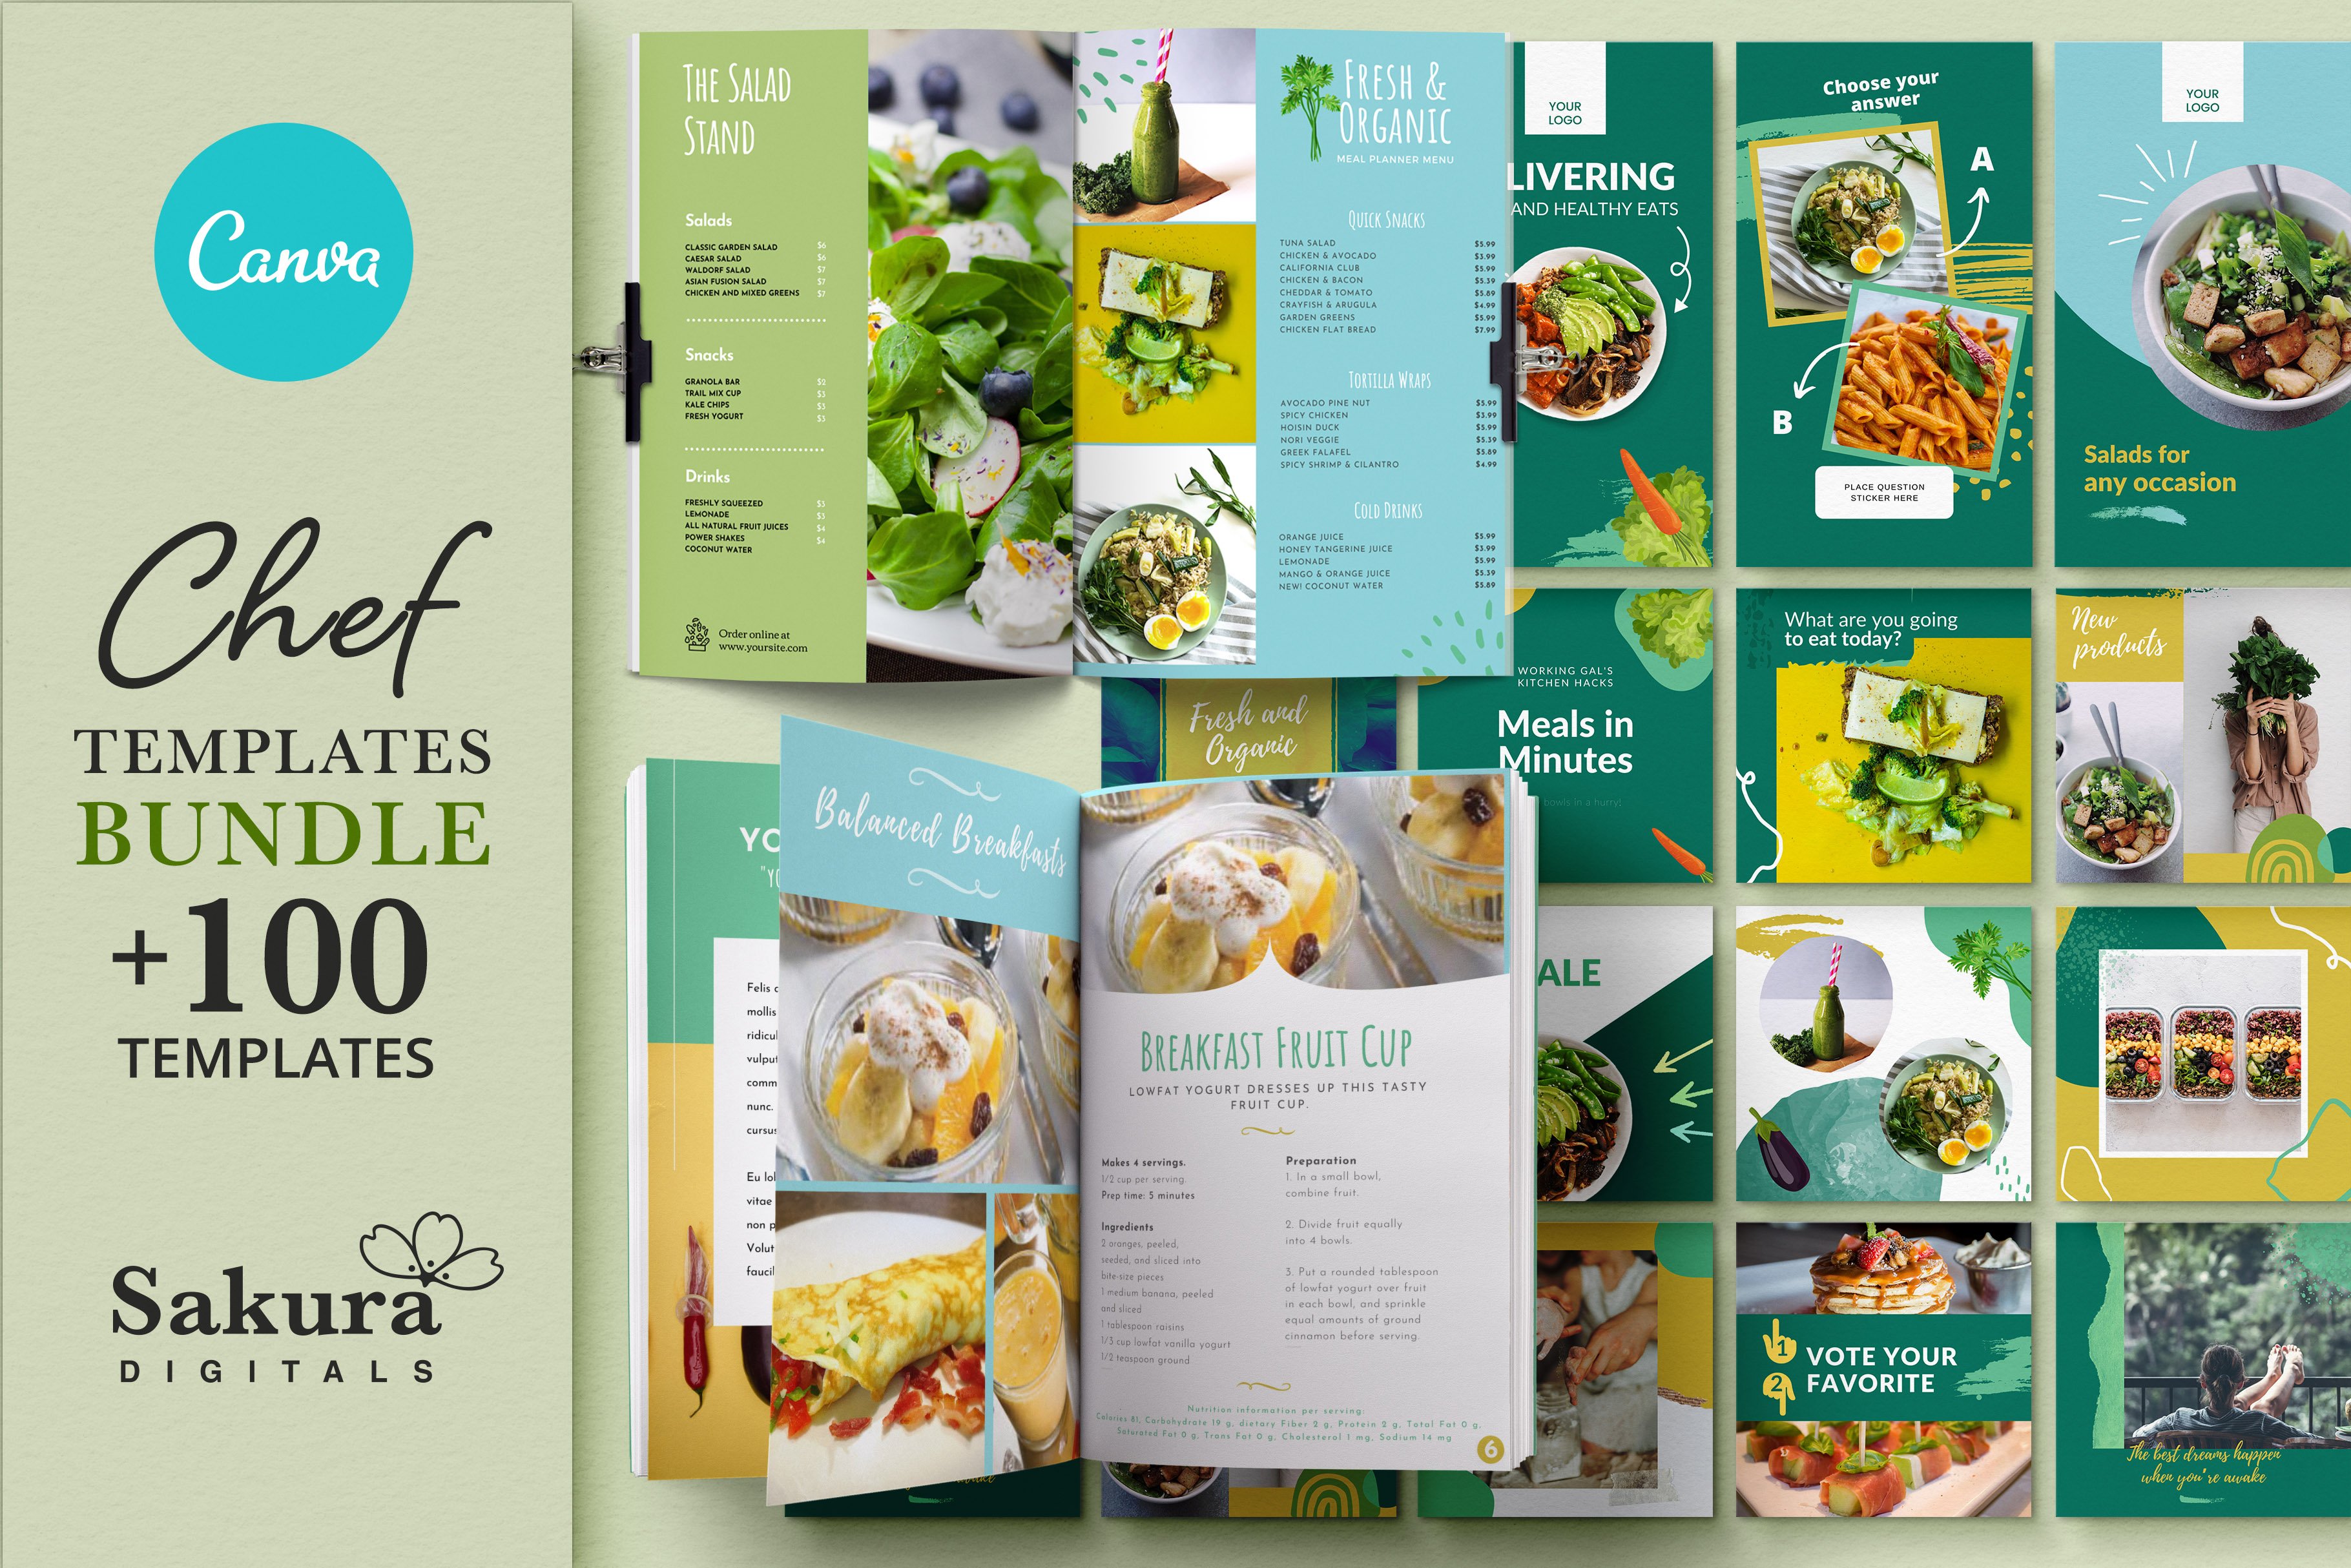 Chef & Restaurant Templates Bundle cover image.